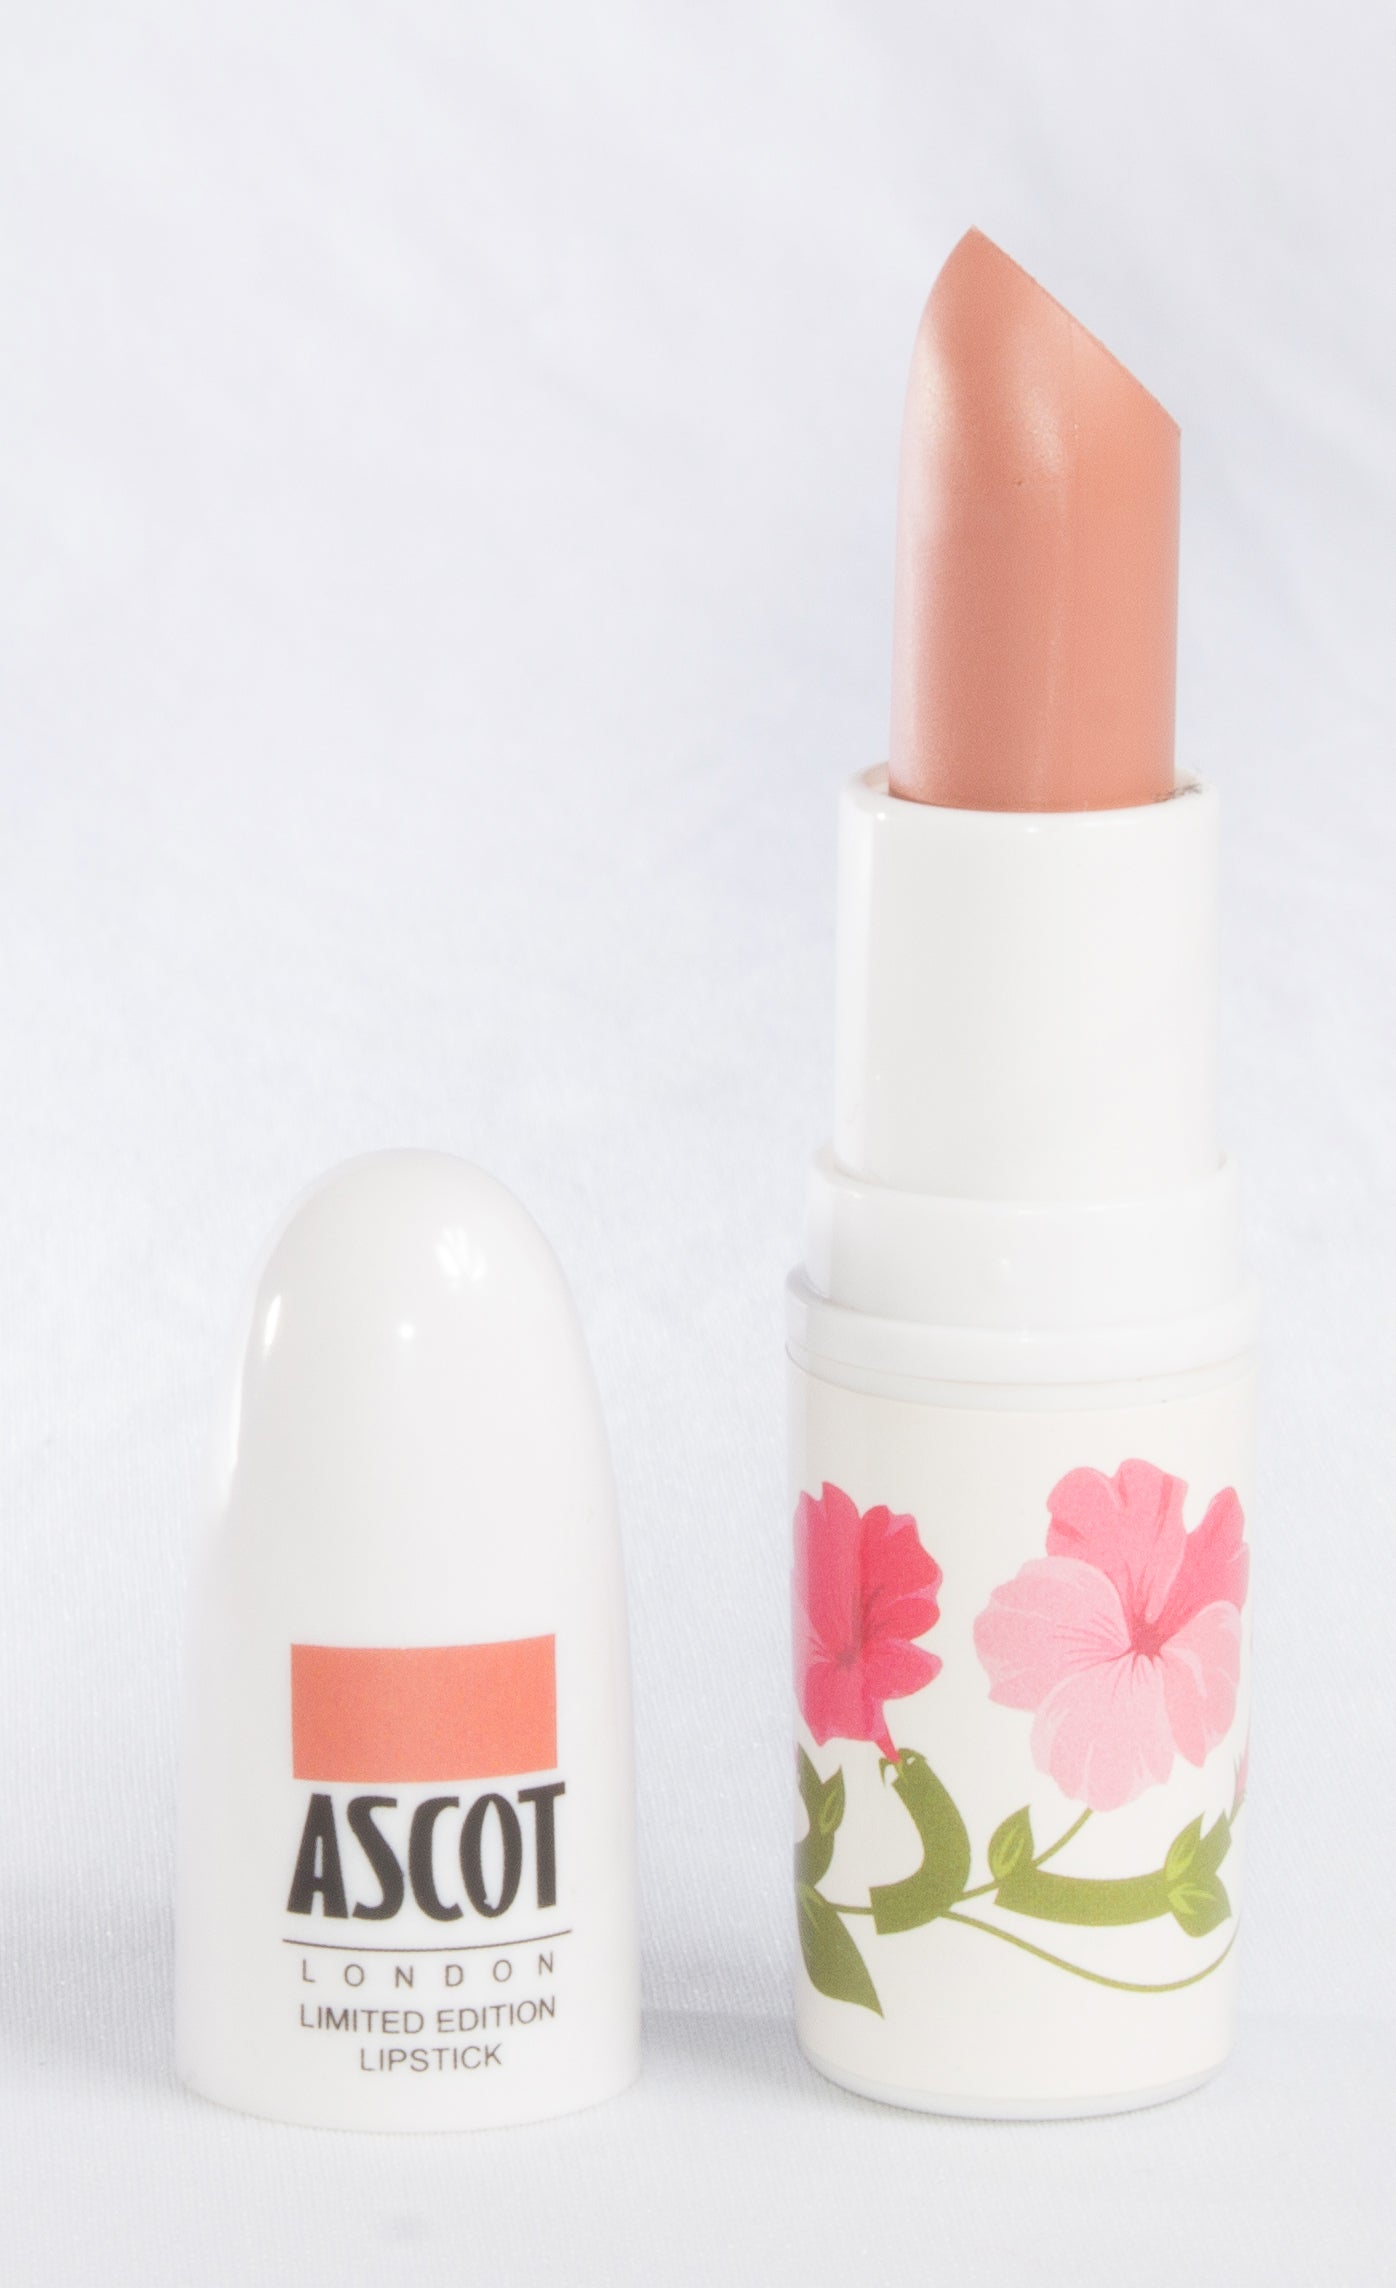 Ascot Limited Edition Lip Stick